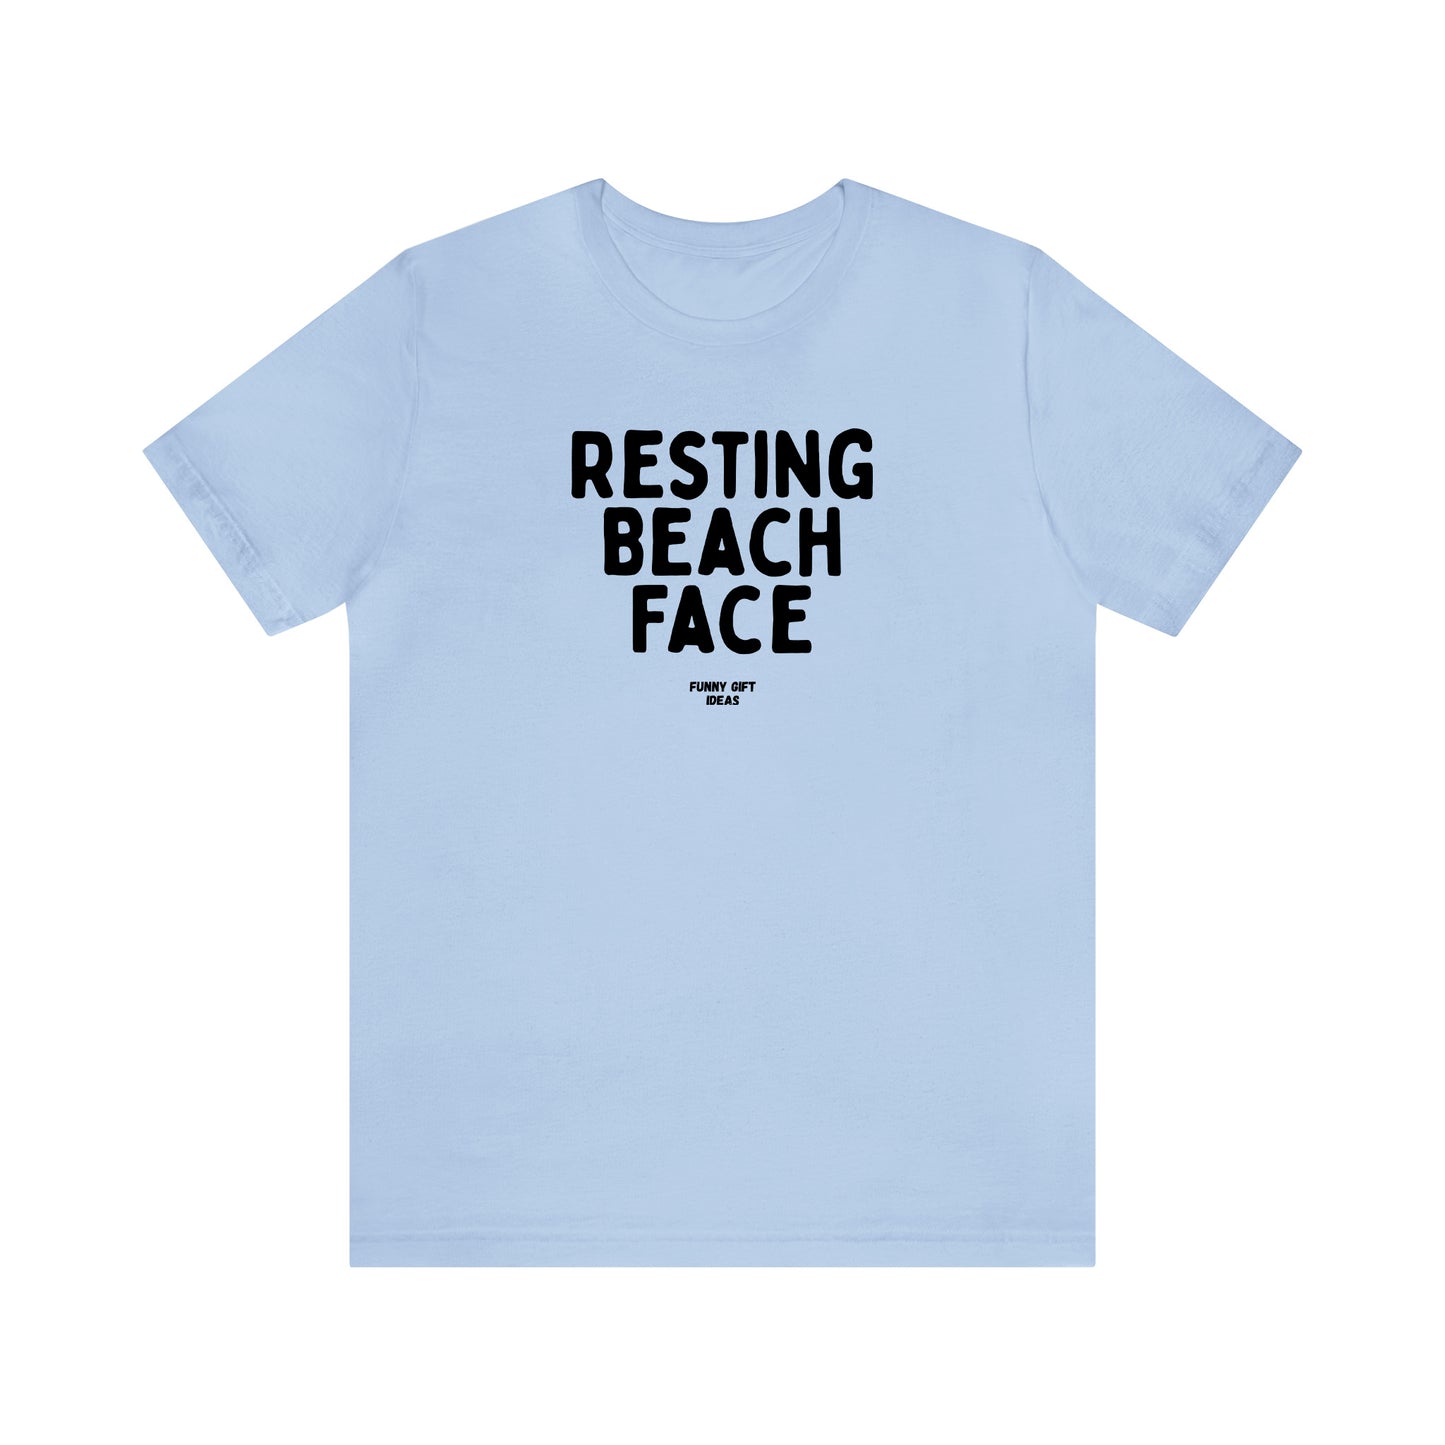 Funny Shirts for Women - Resting Beach Face - Women's T Shirts